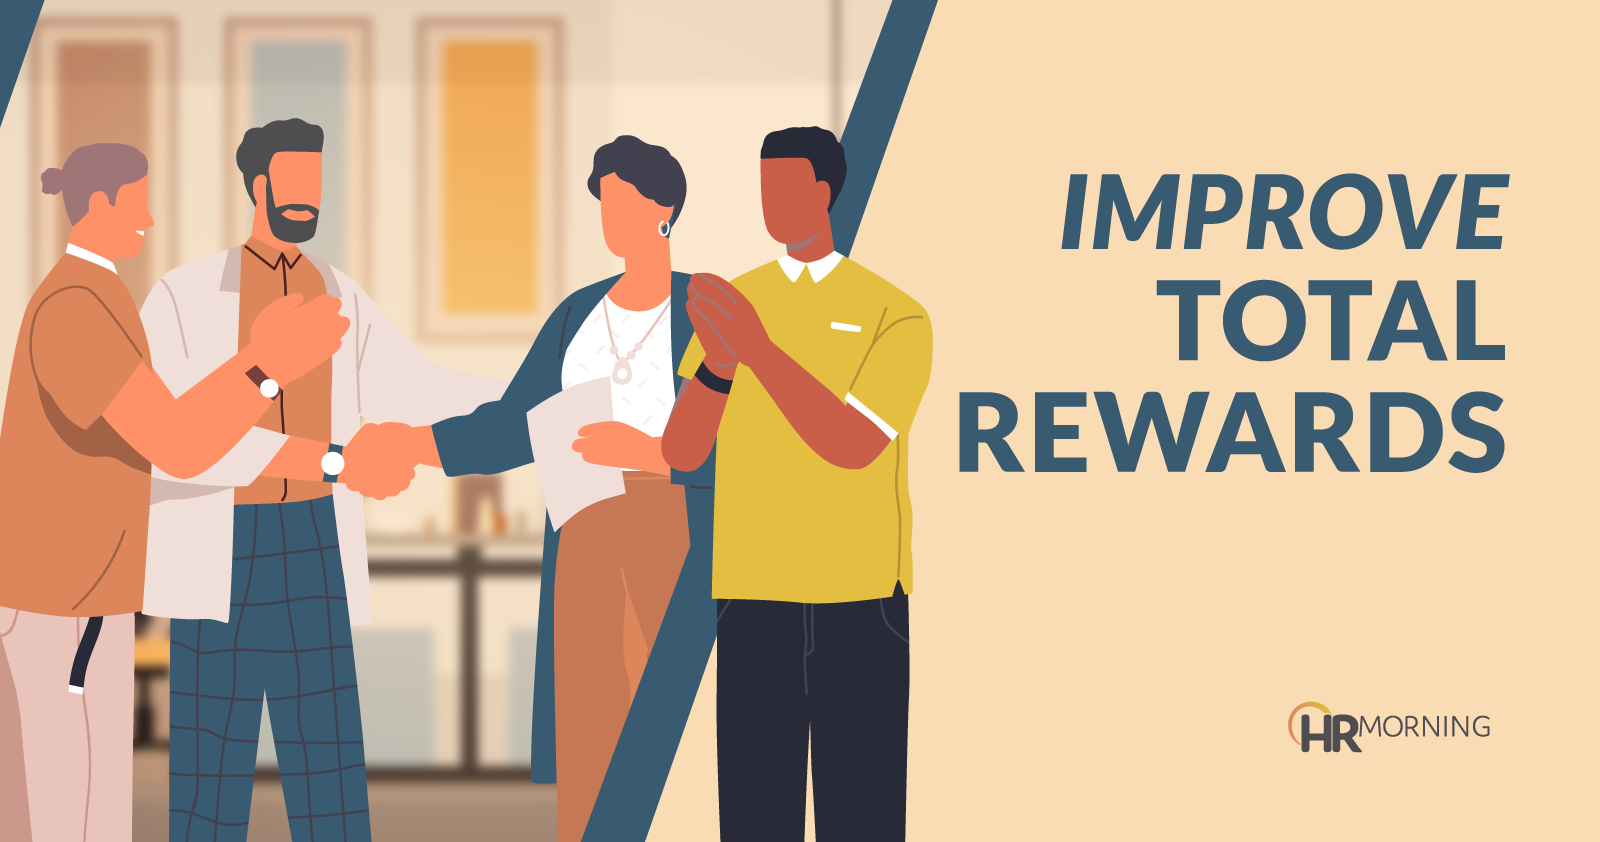 Improve total rewards